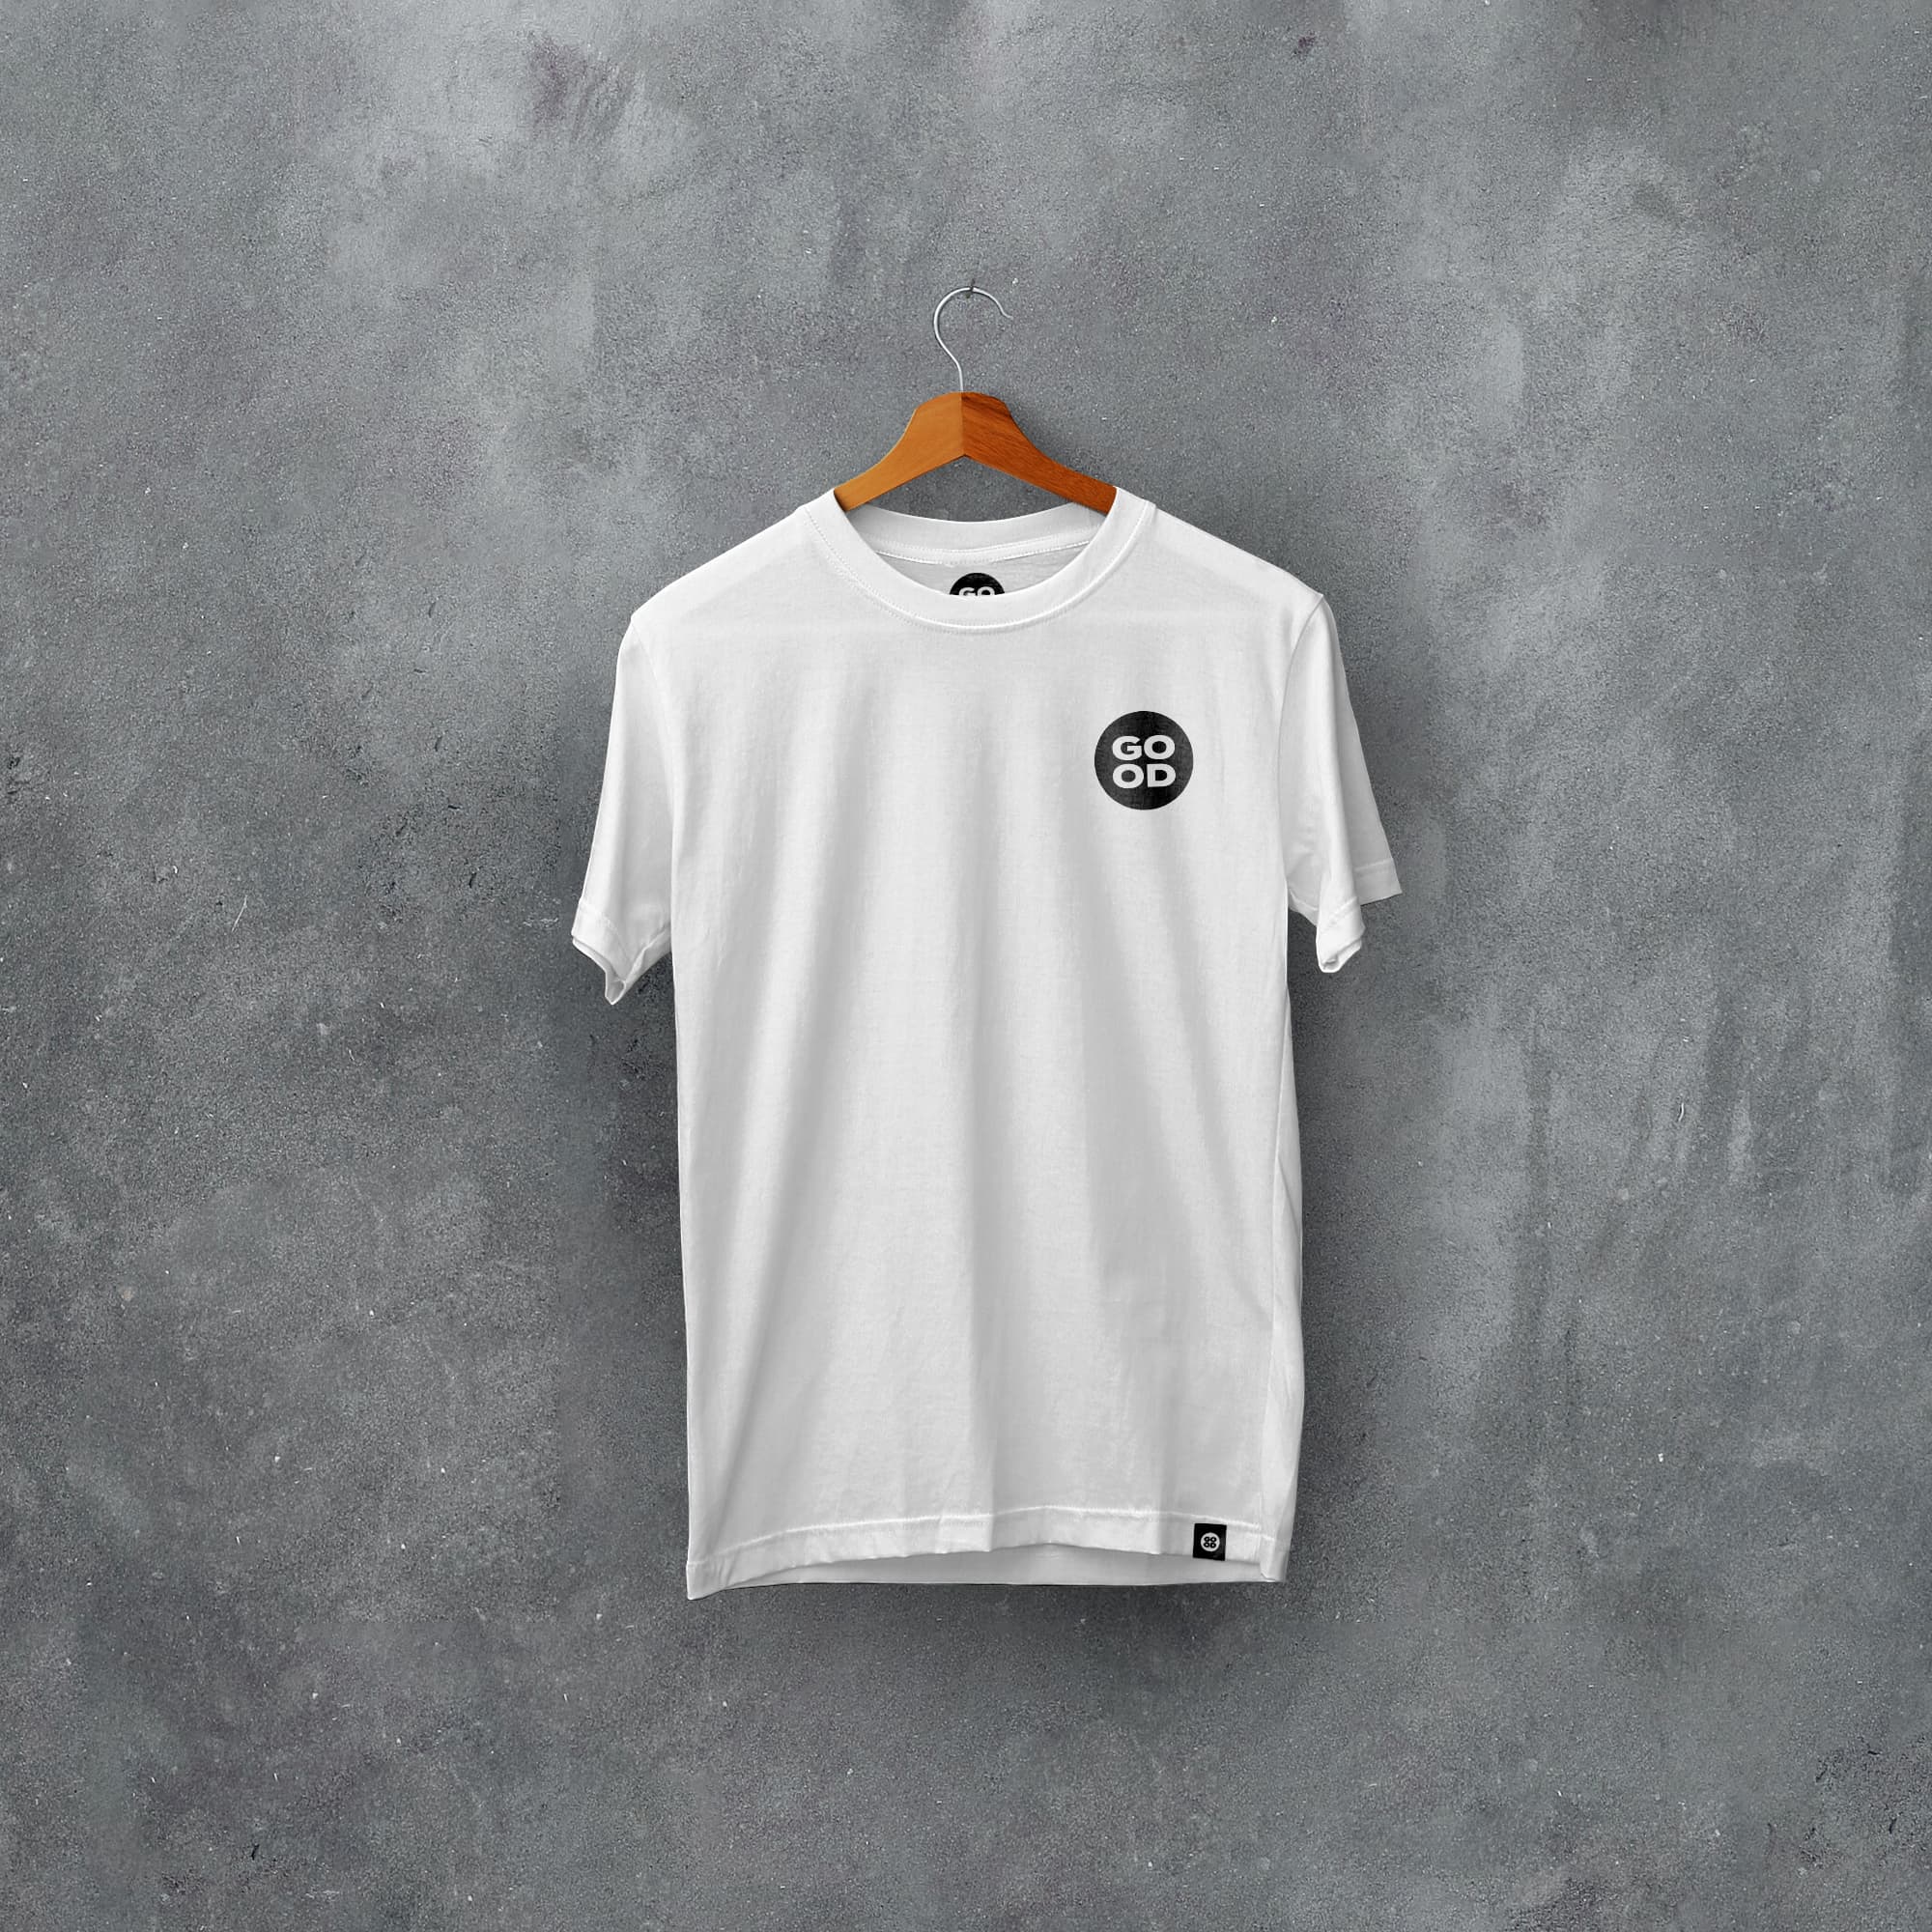 Everton Classic Kits Football T-Shirt